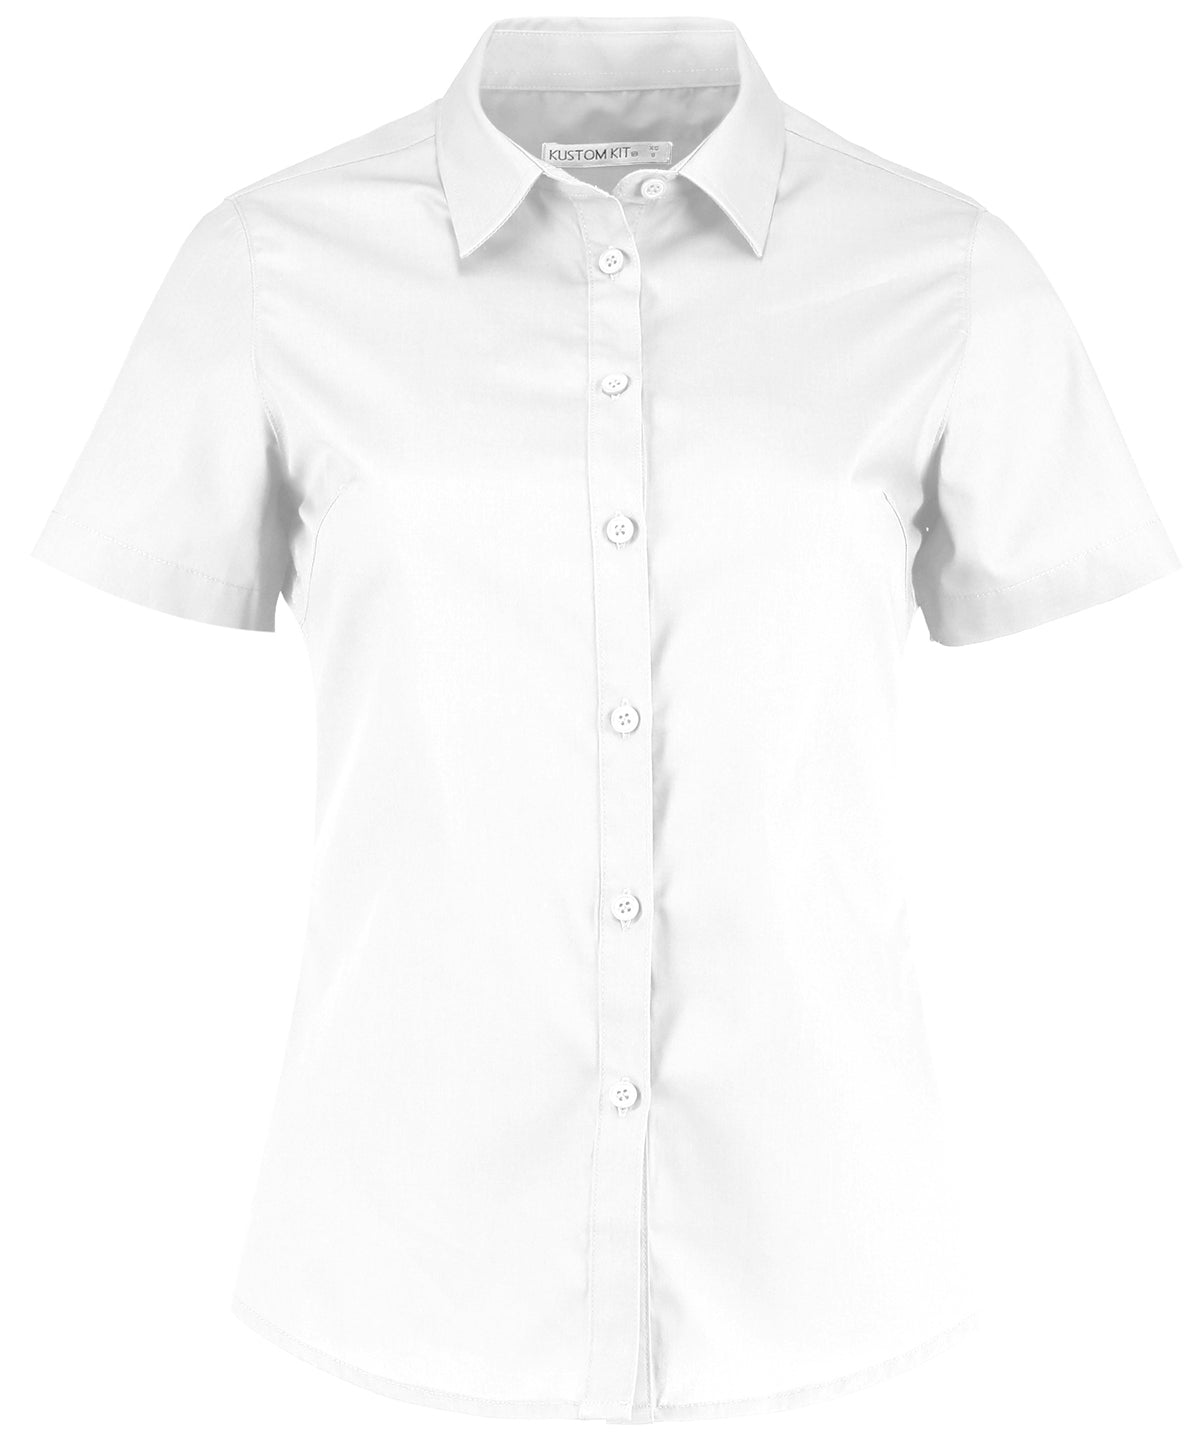 Bolir - Women's Poplin Shirt Short Sleeve